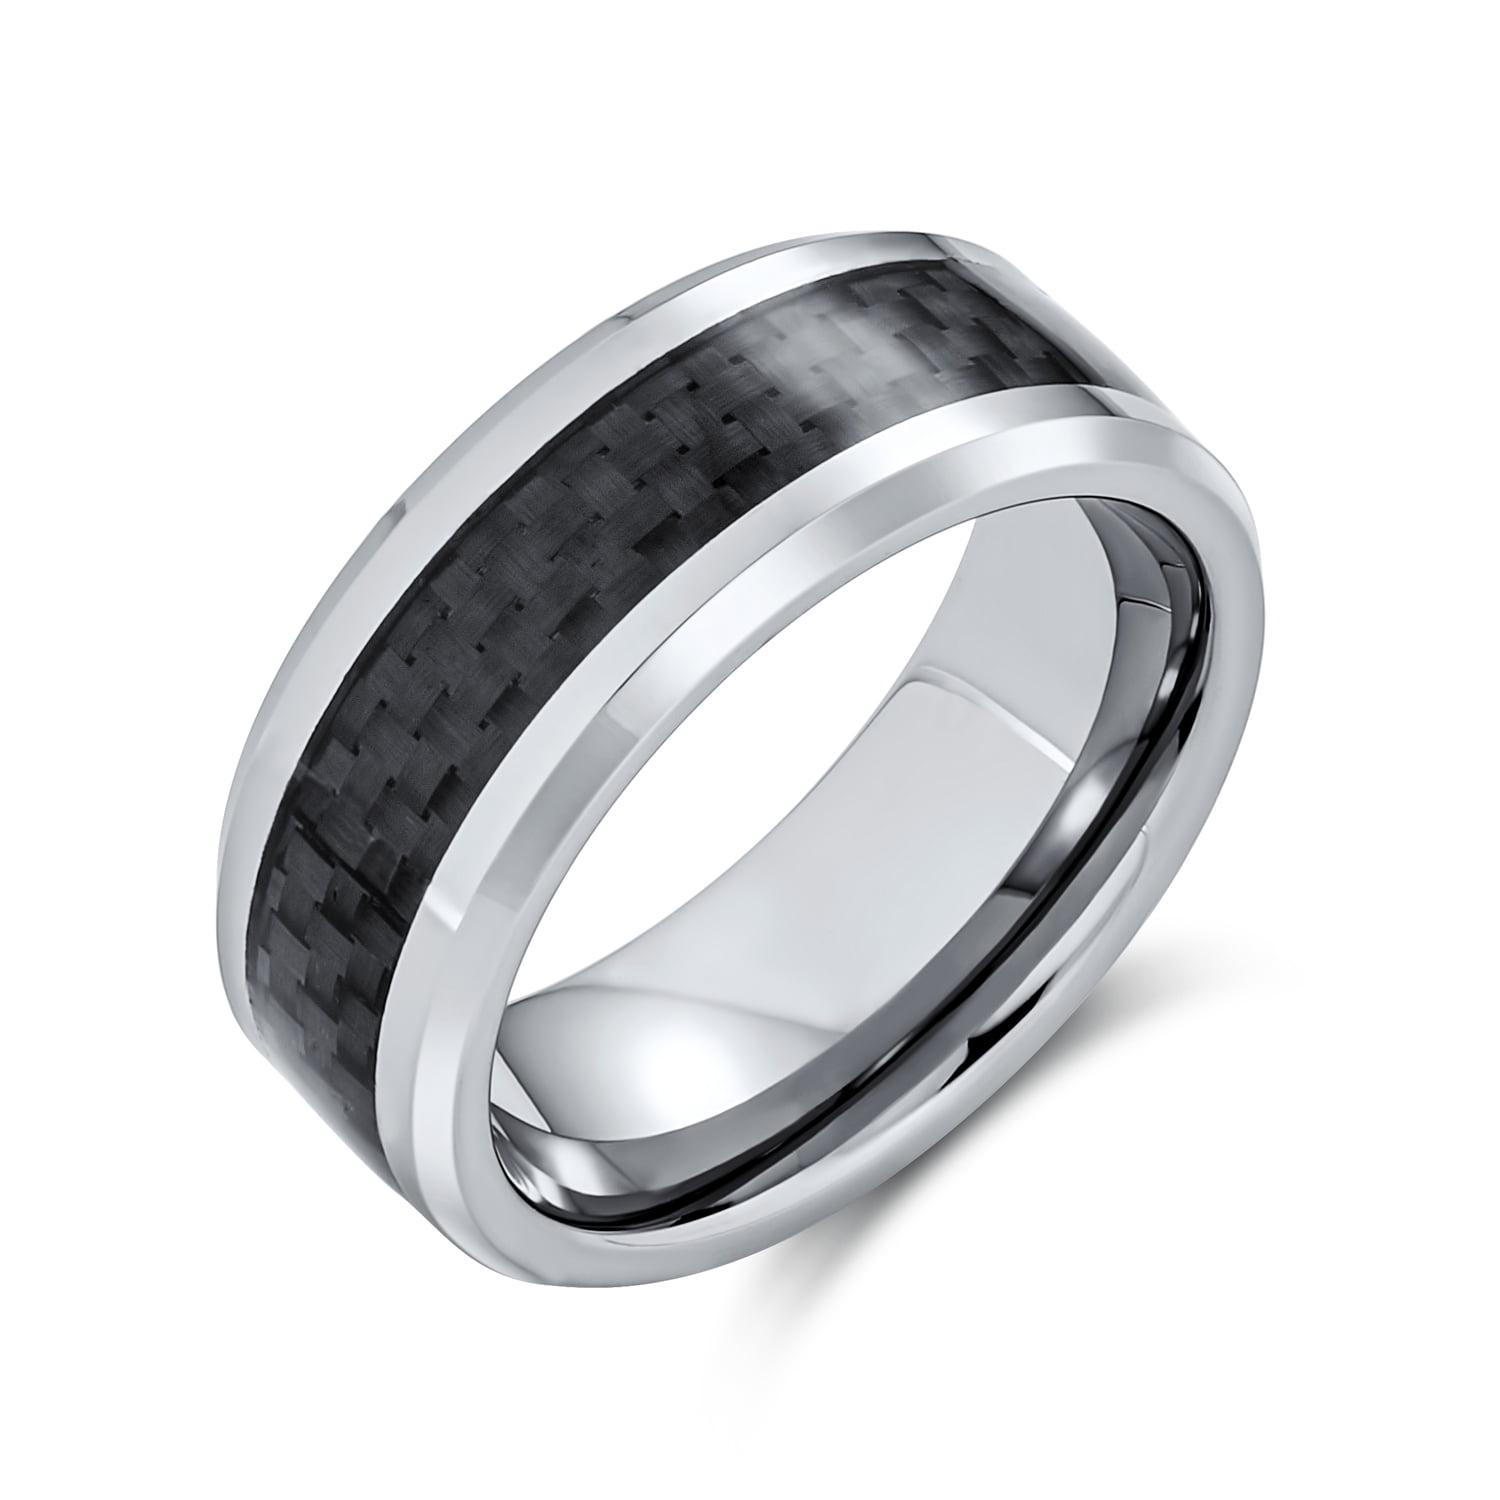 Details about   Titanium Steel Men's Black Ring 8MM Wedding Engagement Anniversary Band Size8-11 